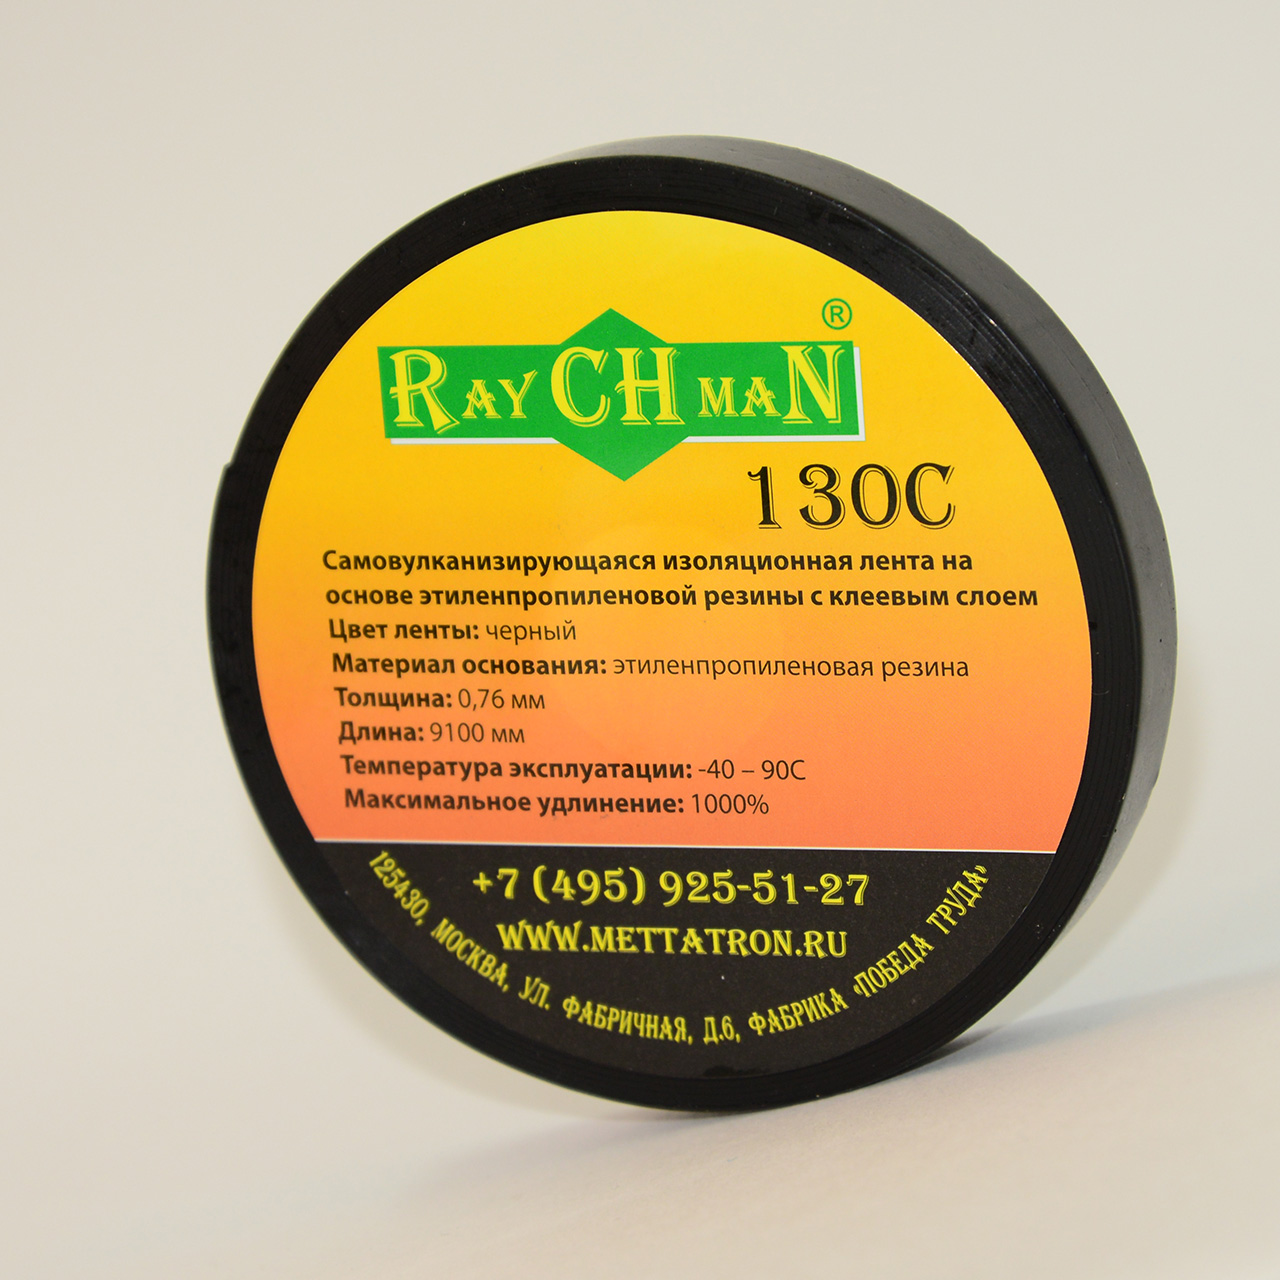 Raychman ® 130C